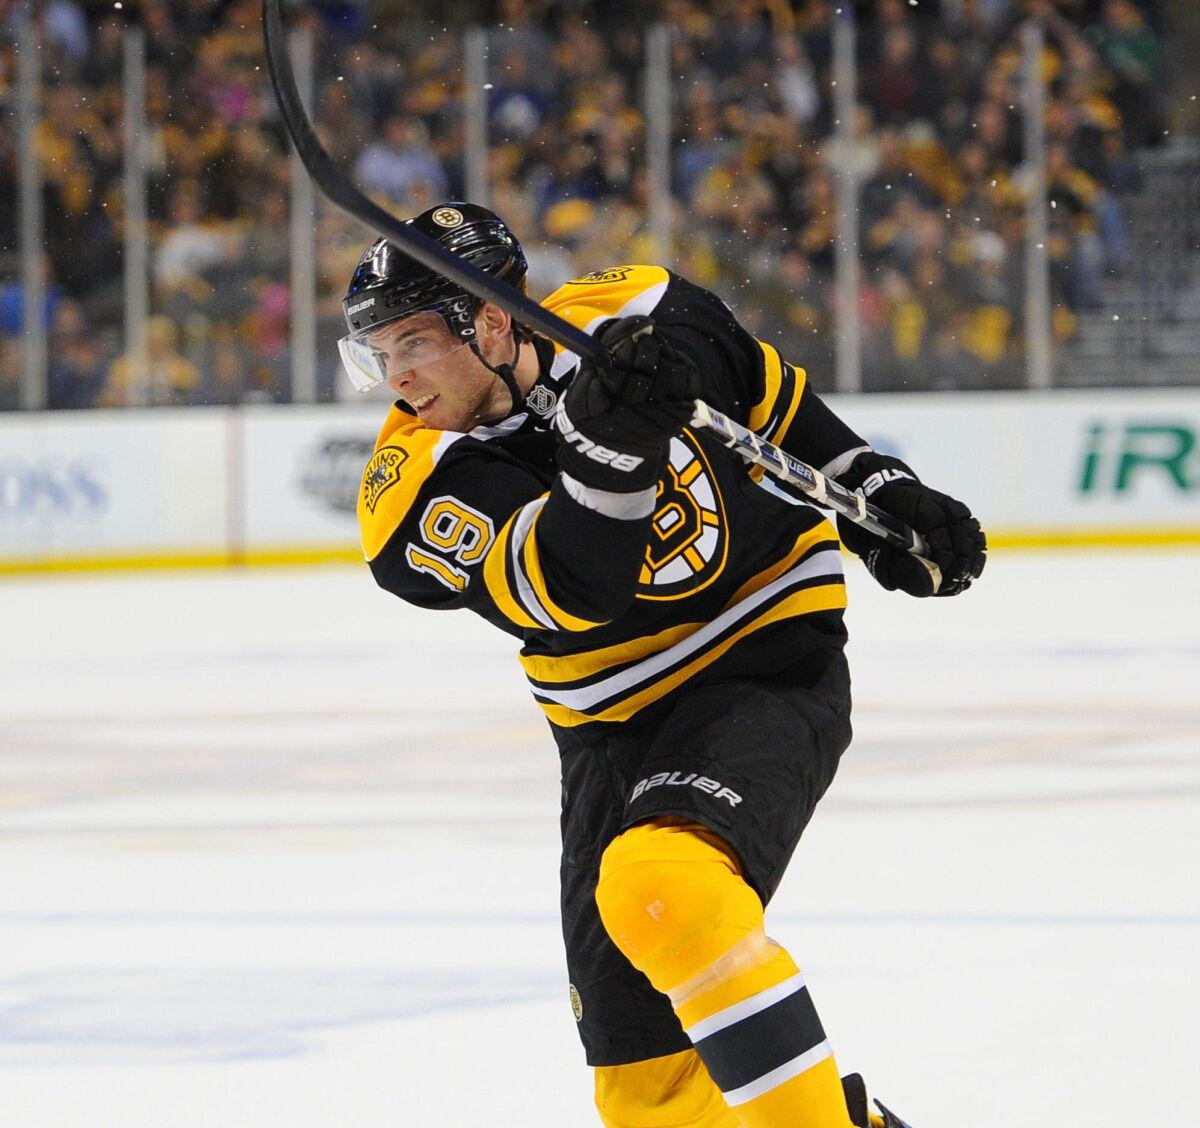 Boston Bruins' top draft pick Tyler Seguin determined to break into